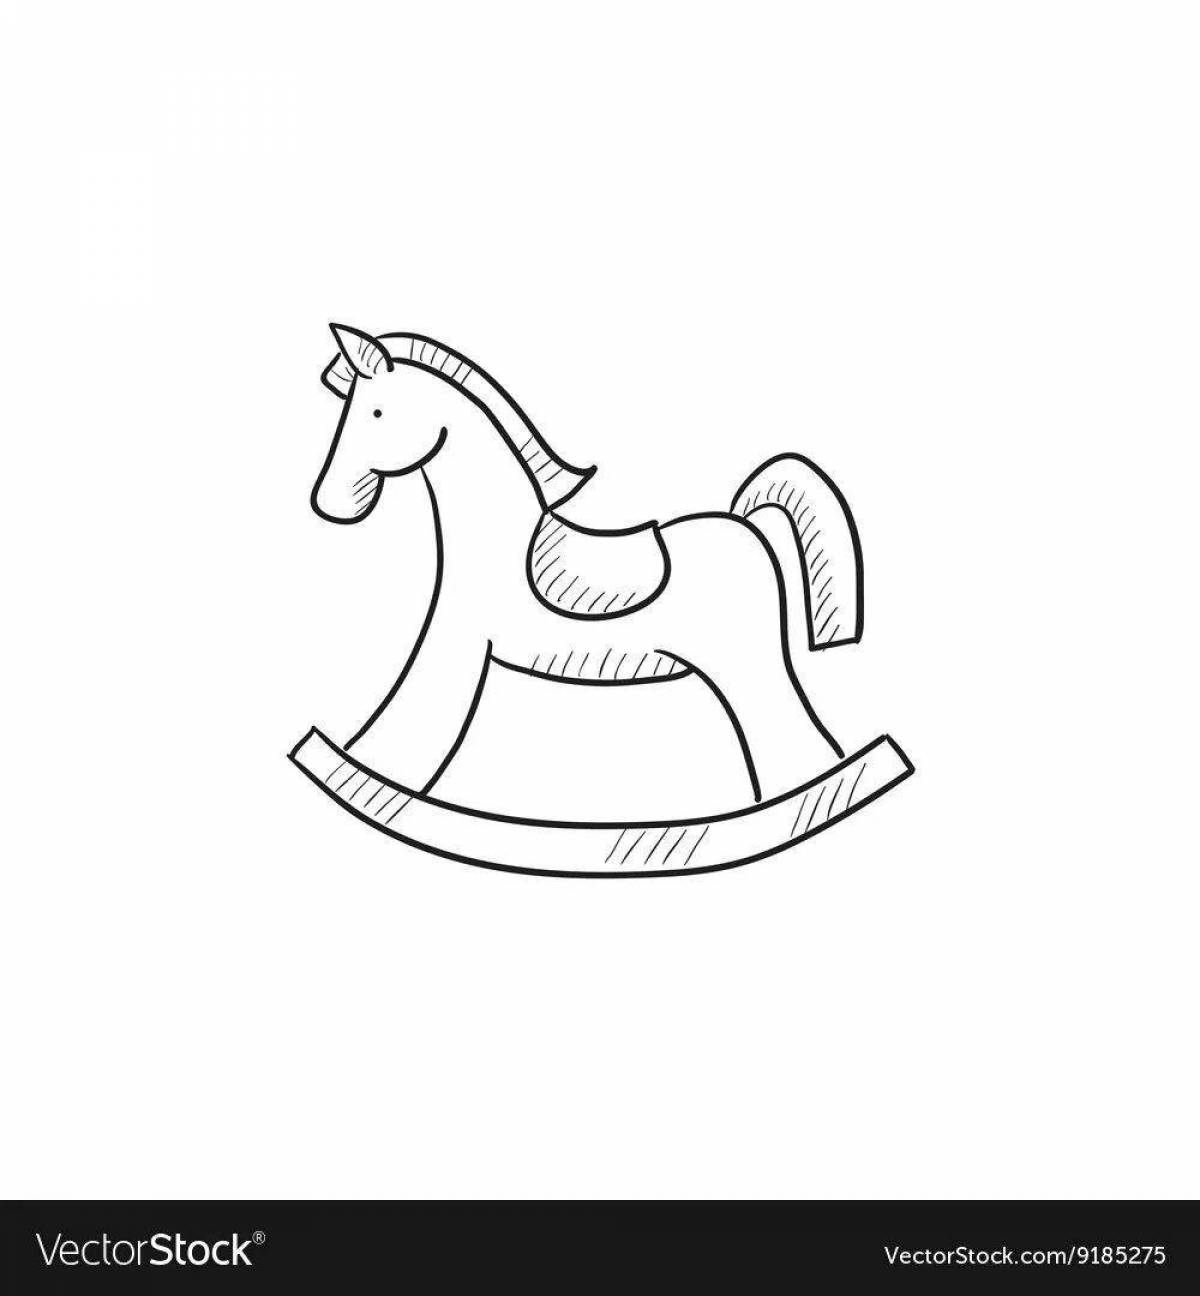 Amazing rocking horse coloring book